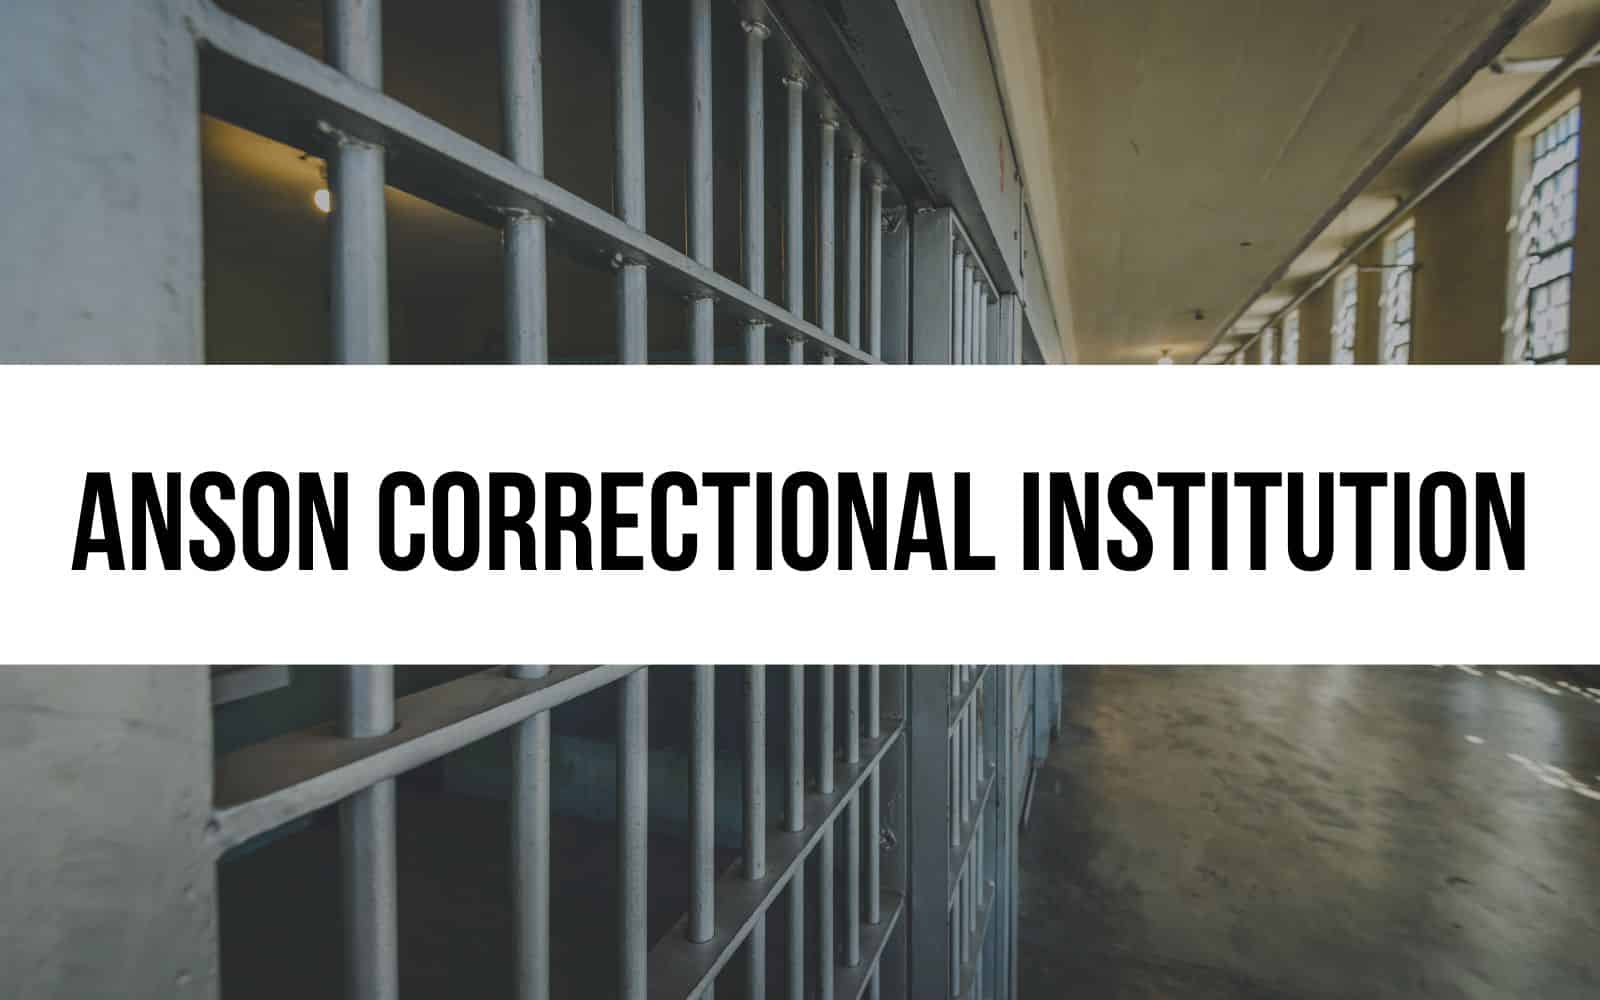 Anson Correctional Institution